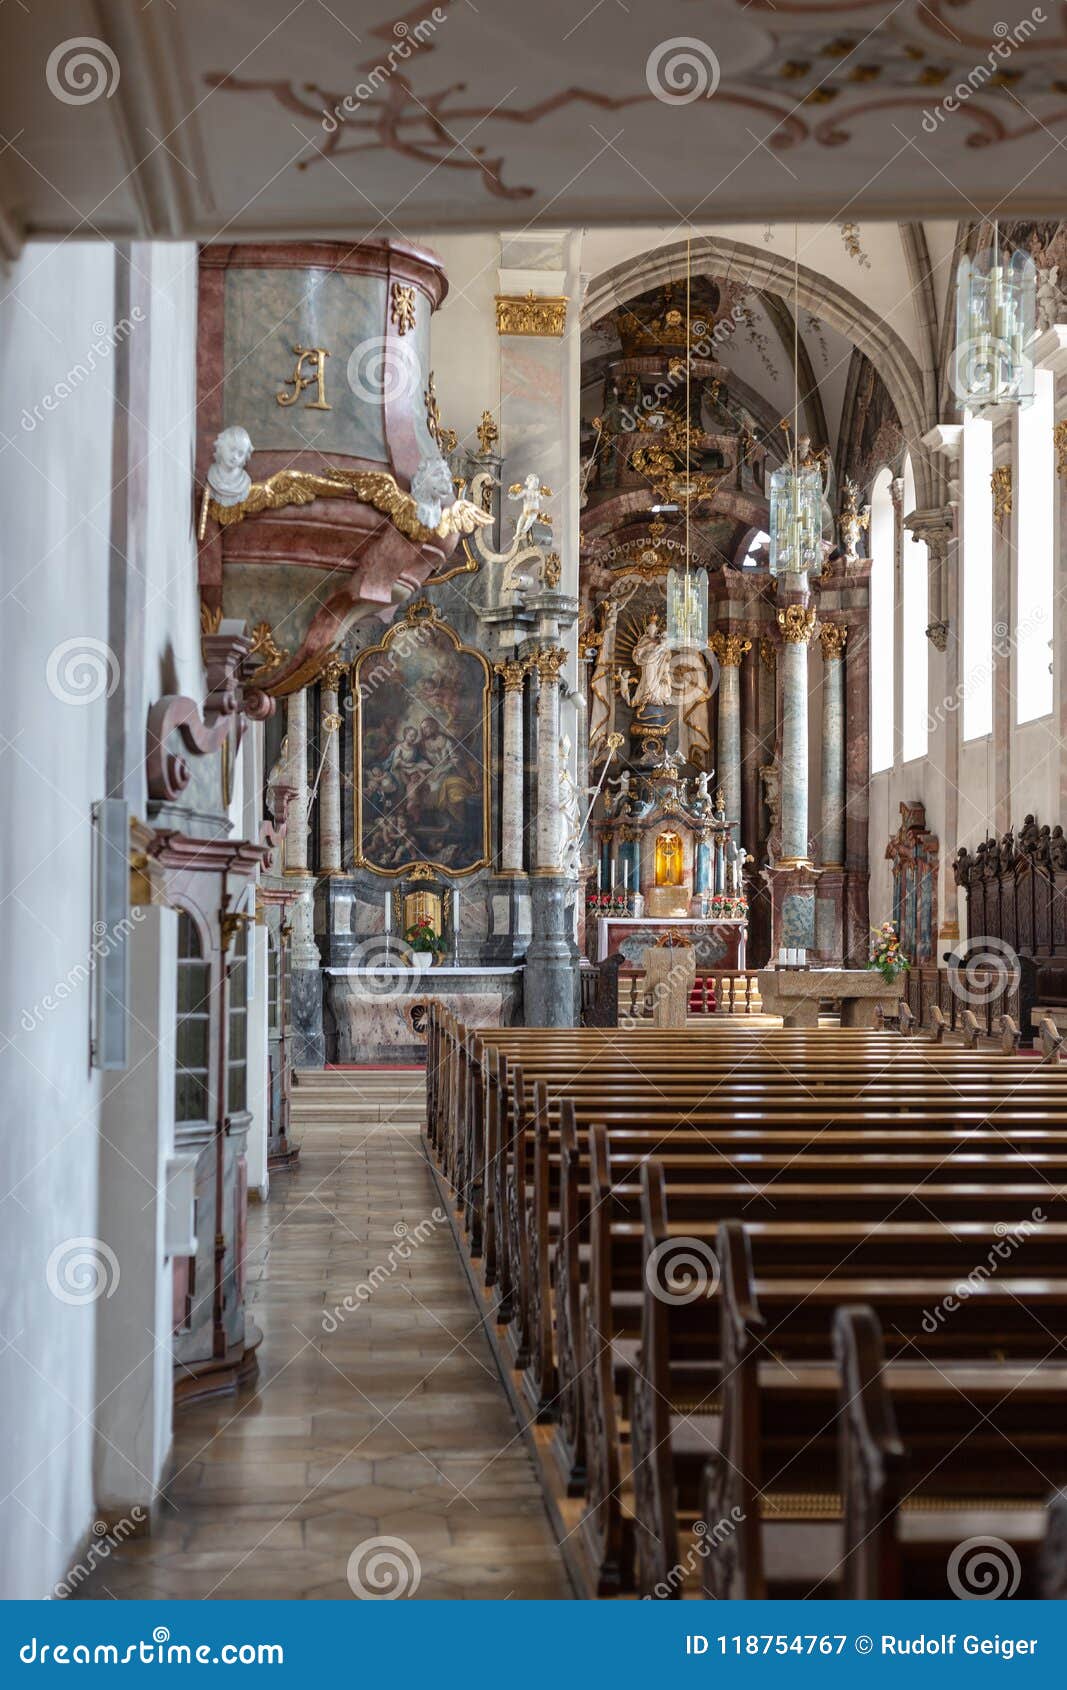 Lirio Insignia Operación posible Church Altar Interiors Decoration in Renaissance and Baroque Sty Stock  Image - Image of pray, interior: 118754767